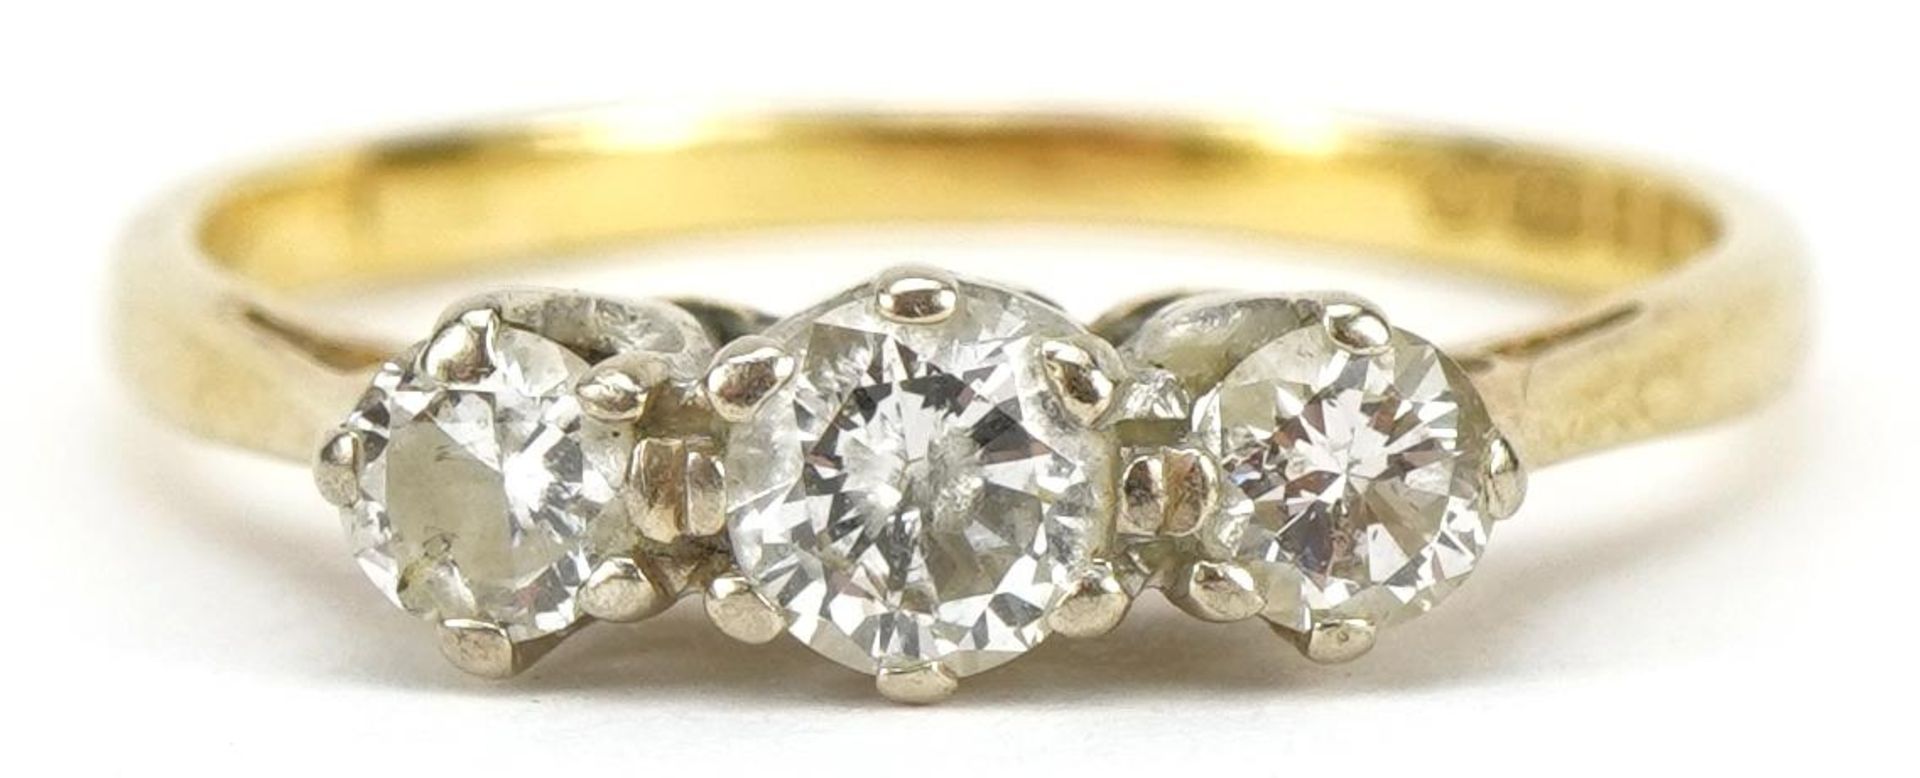 18ct gold diamond three stone ring, the largest diamond approximately 0.18 carat, size M/N, 2.4g :